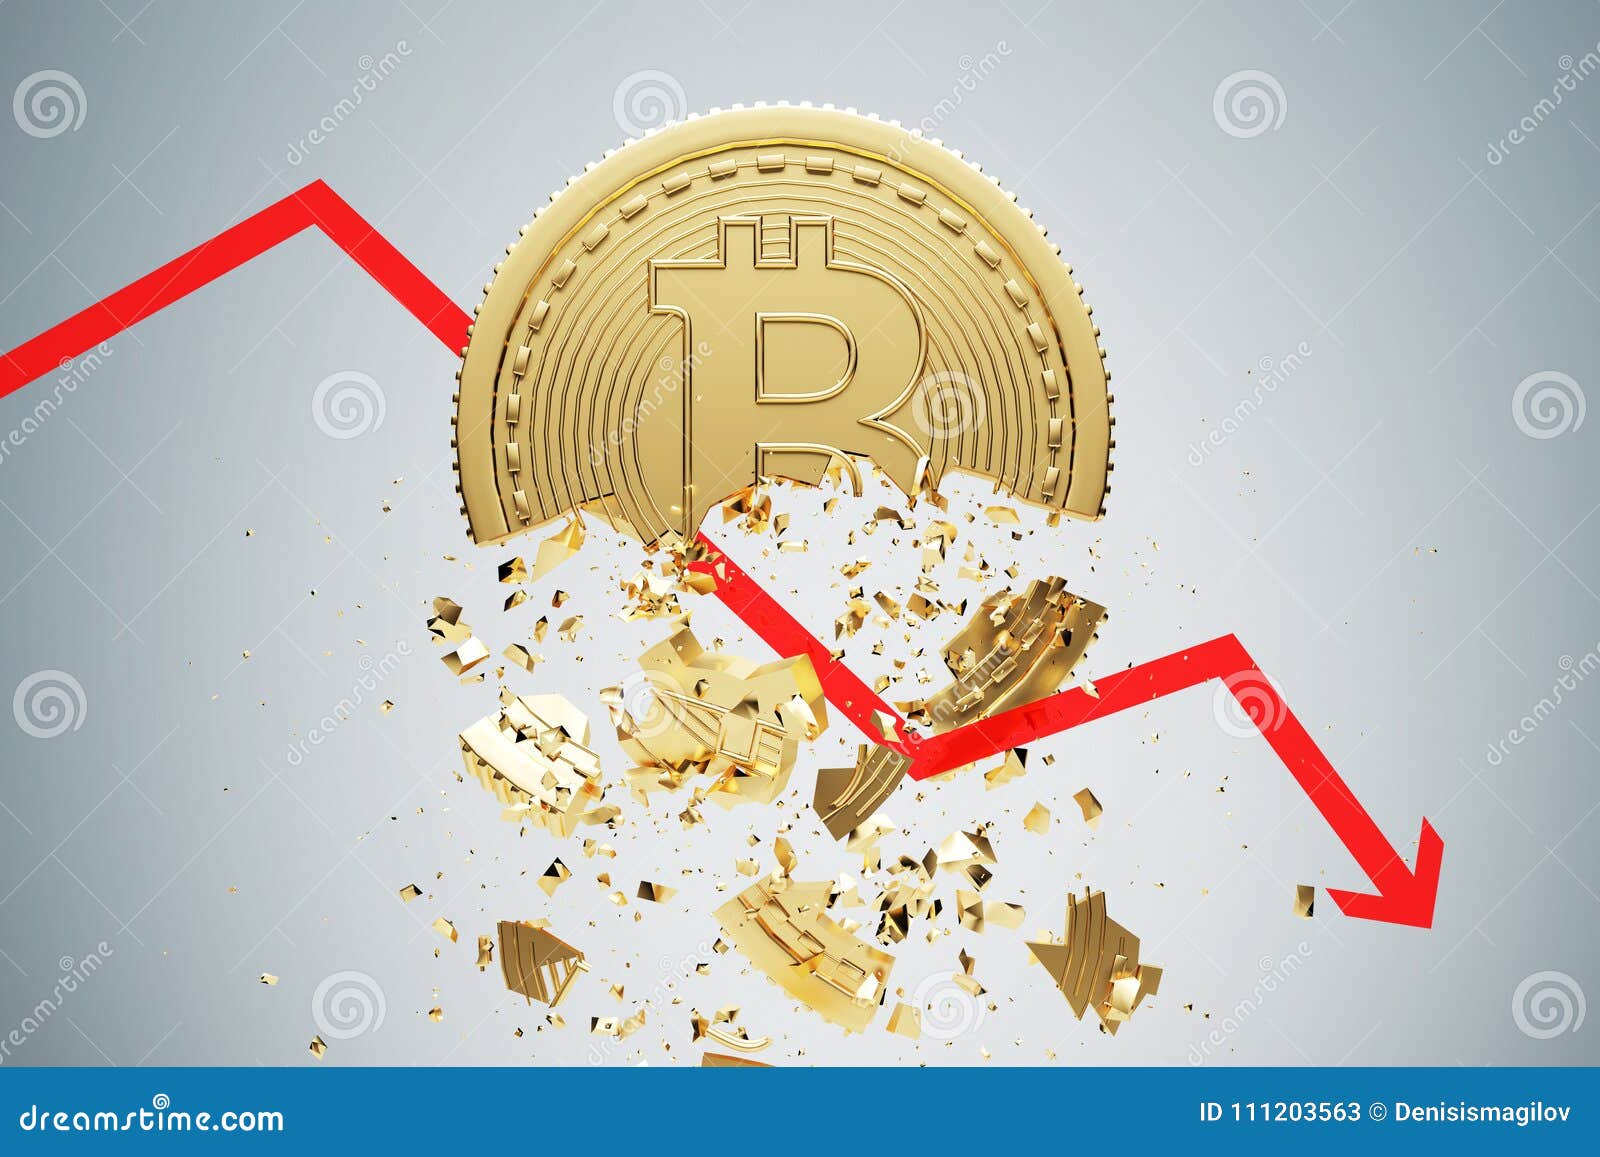 bitcoin collapsing